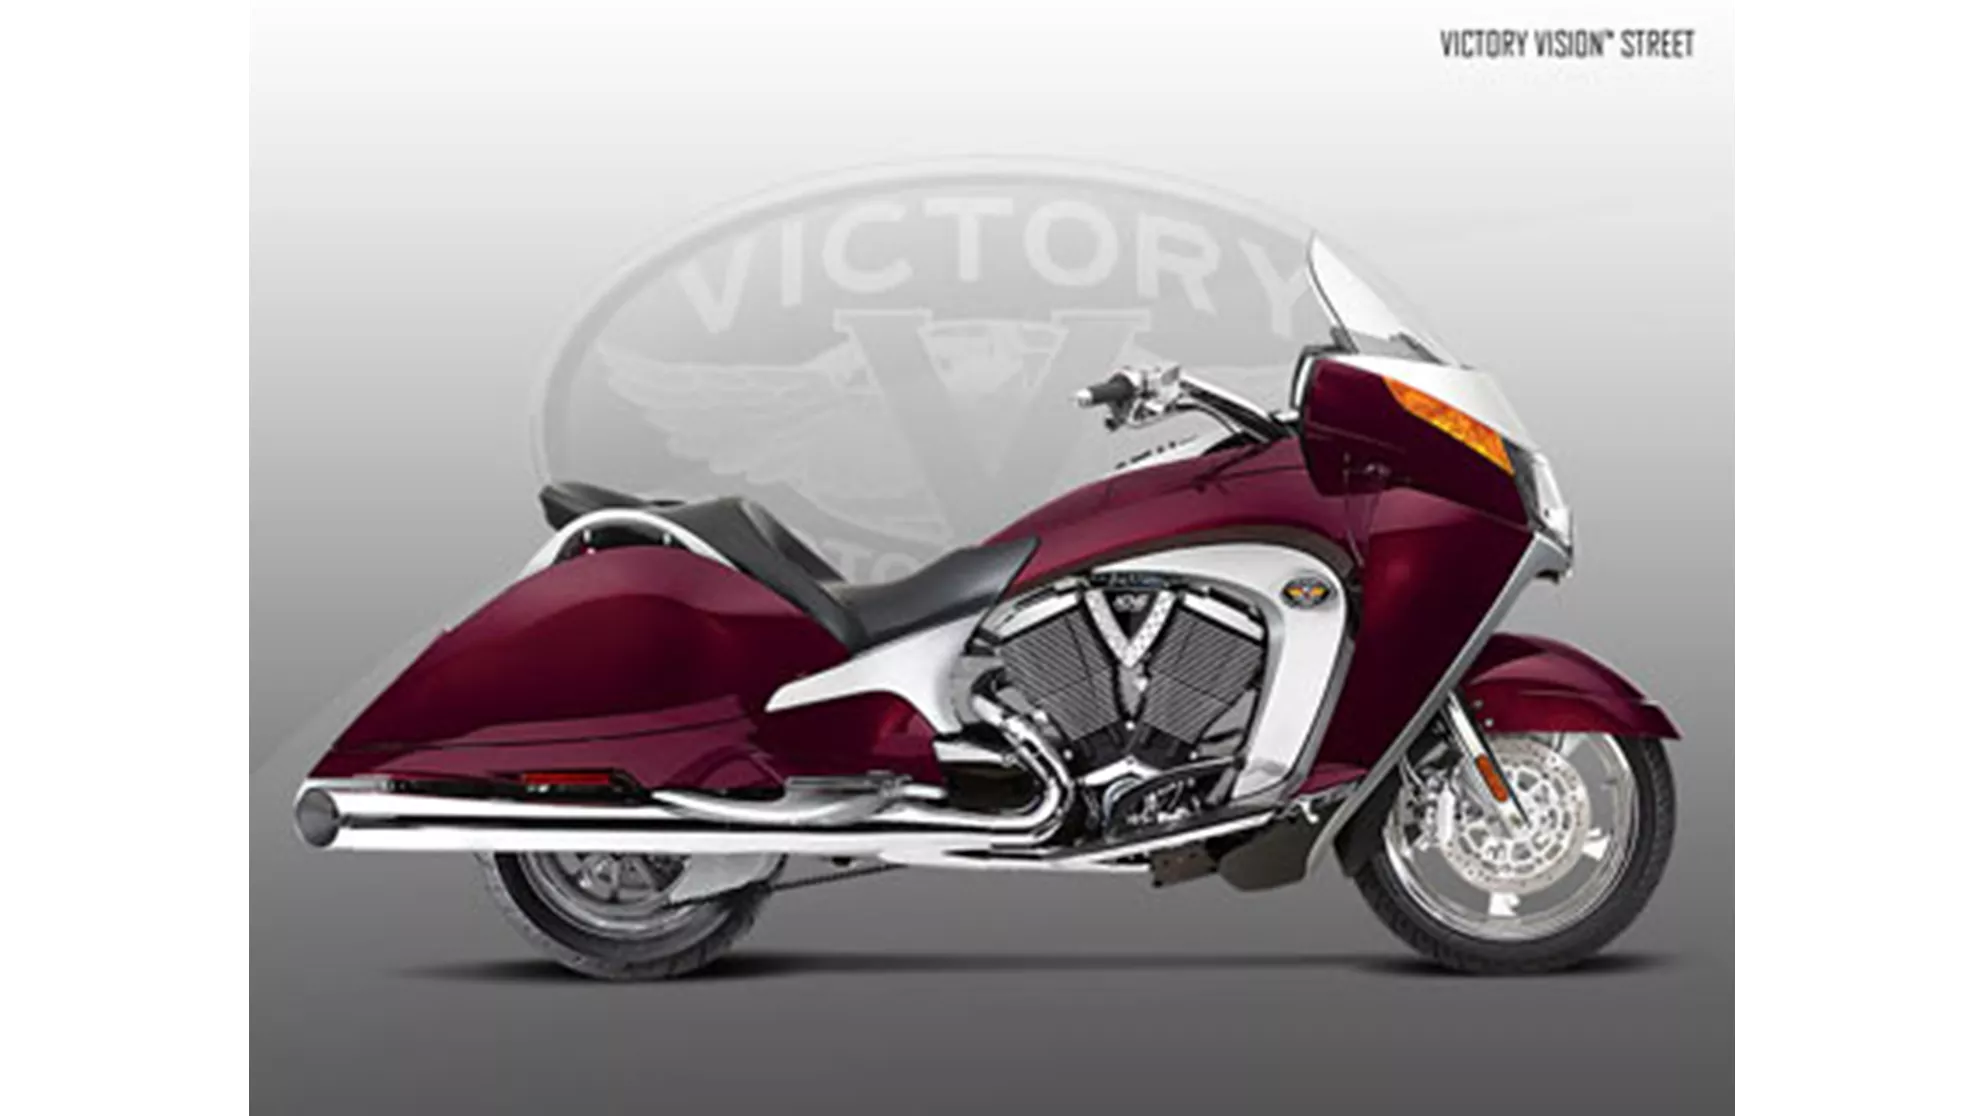 Victory Vision Street - Imagem 1